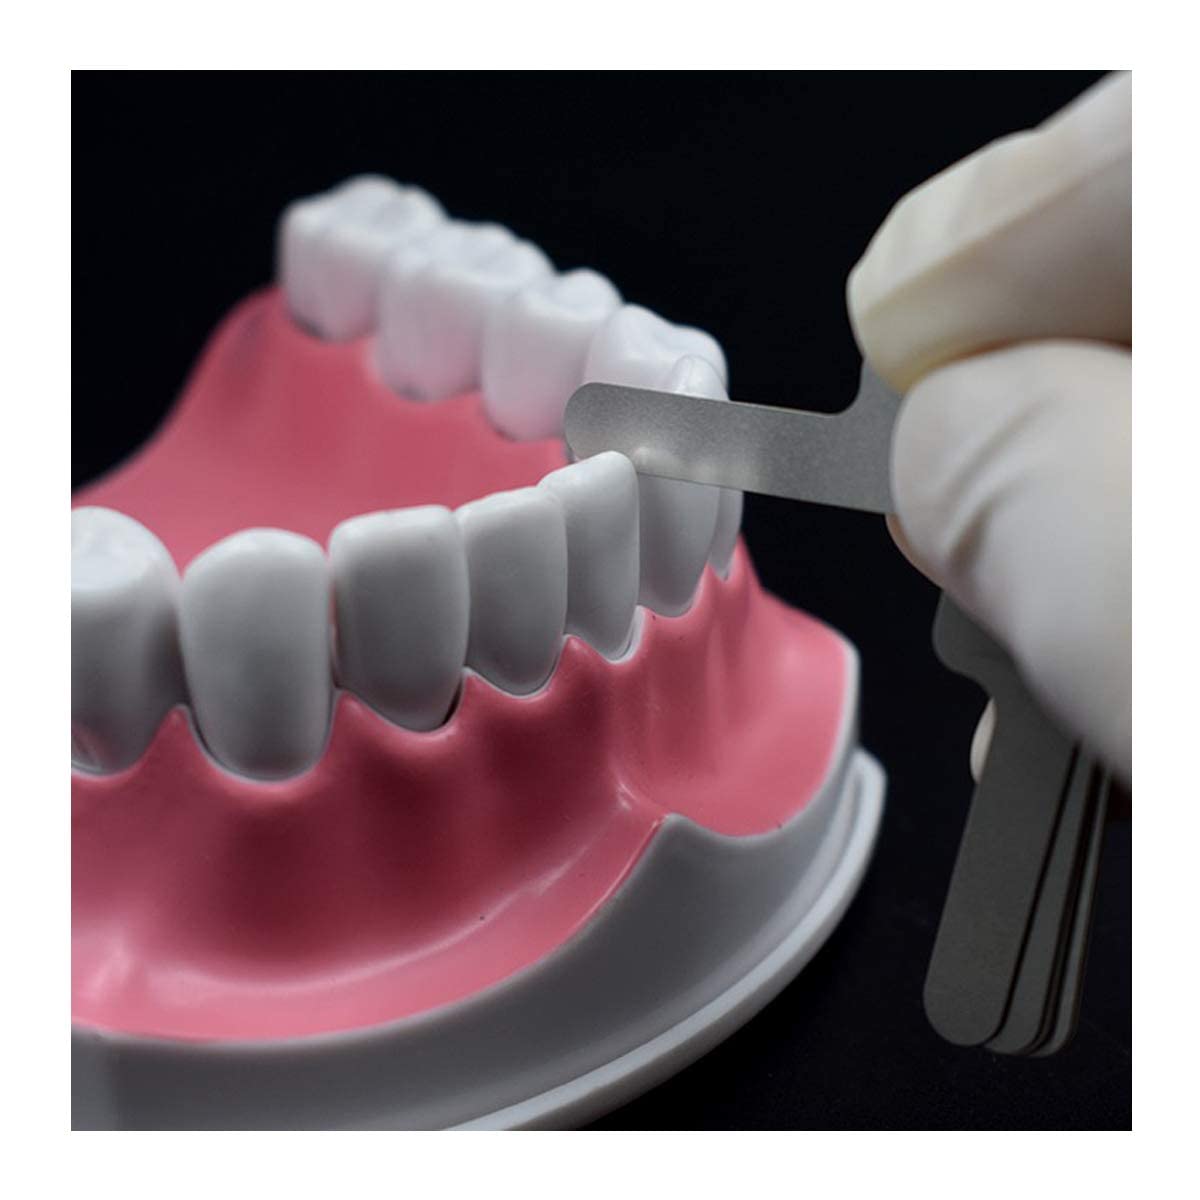 Dental Tooth Gap Measuring Ruler Interproximal Reduction Gauge Measure Reciprocating IPR Orthodontic Treatment Tools